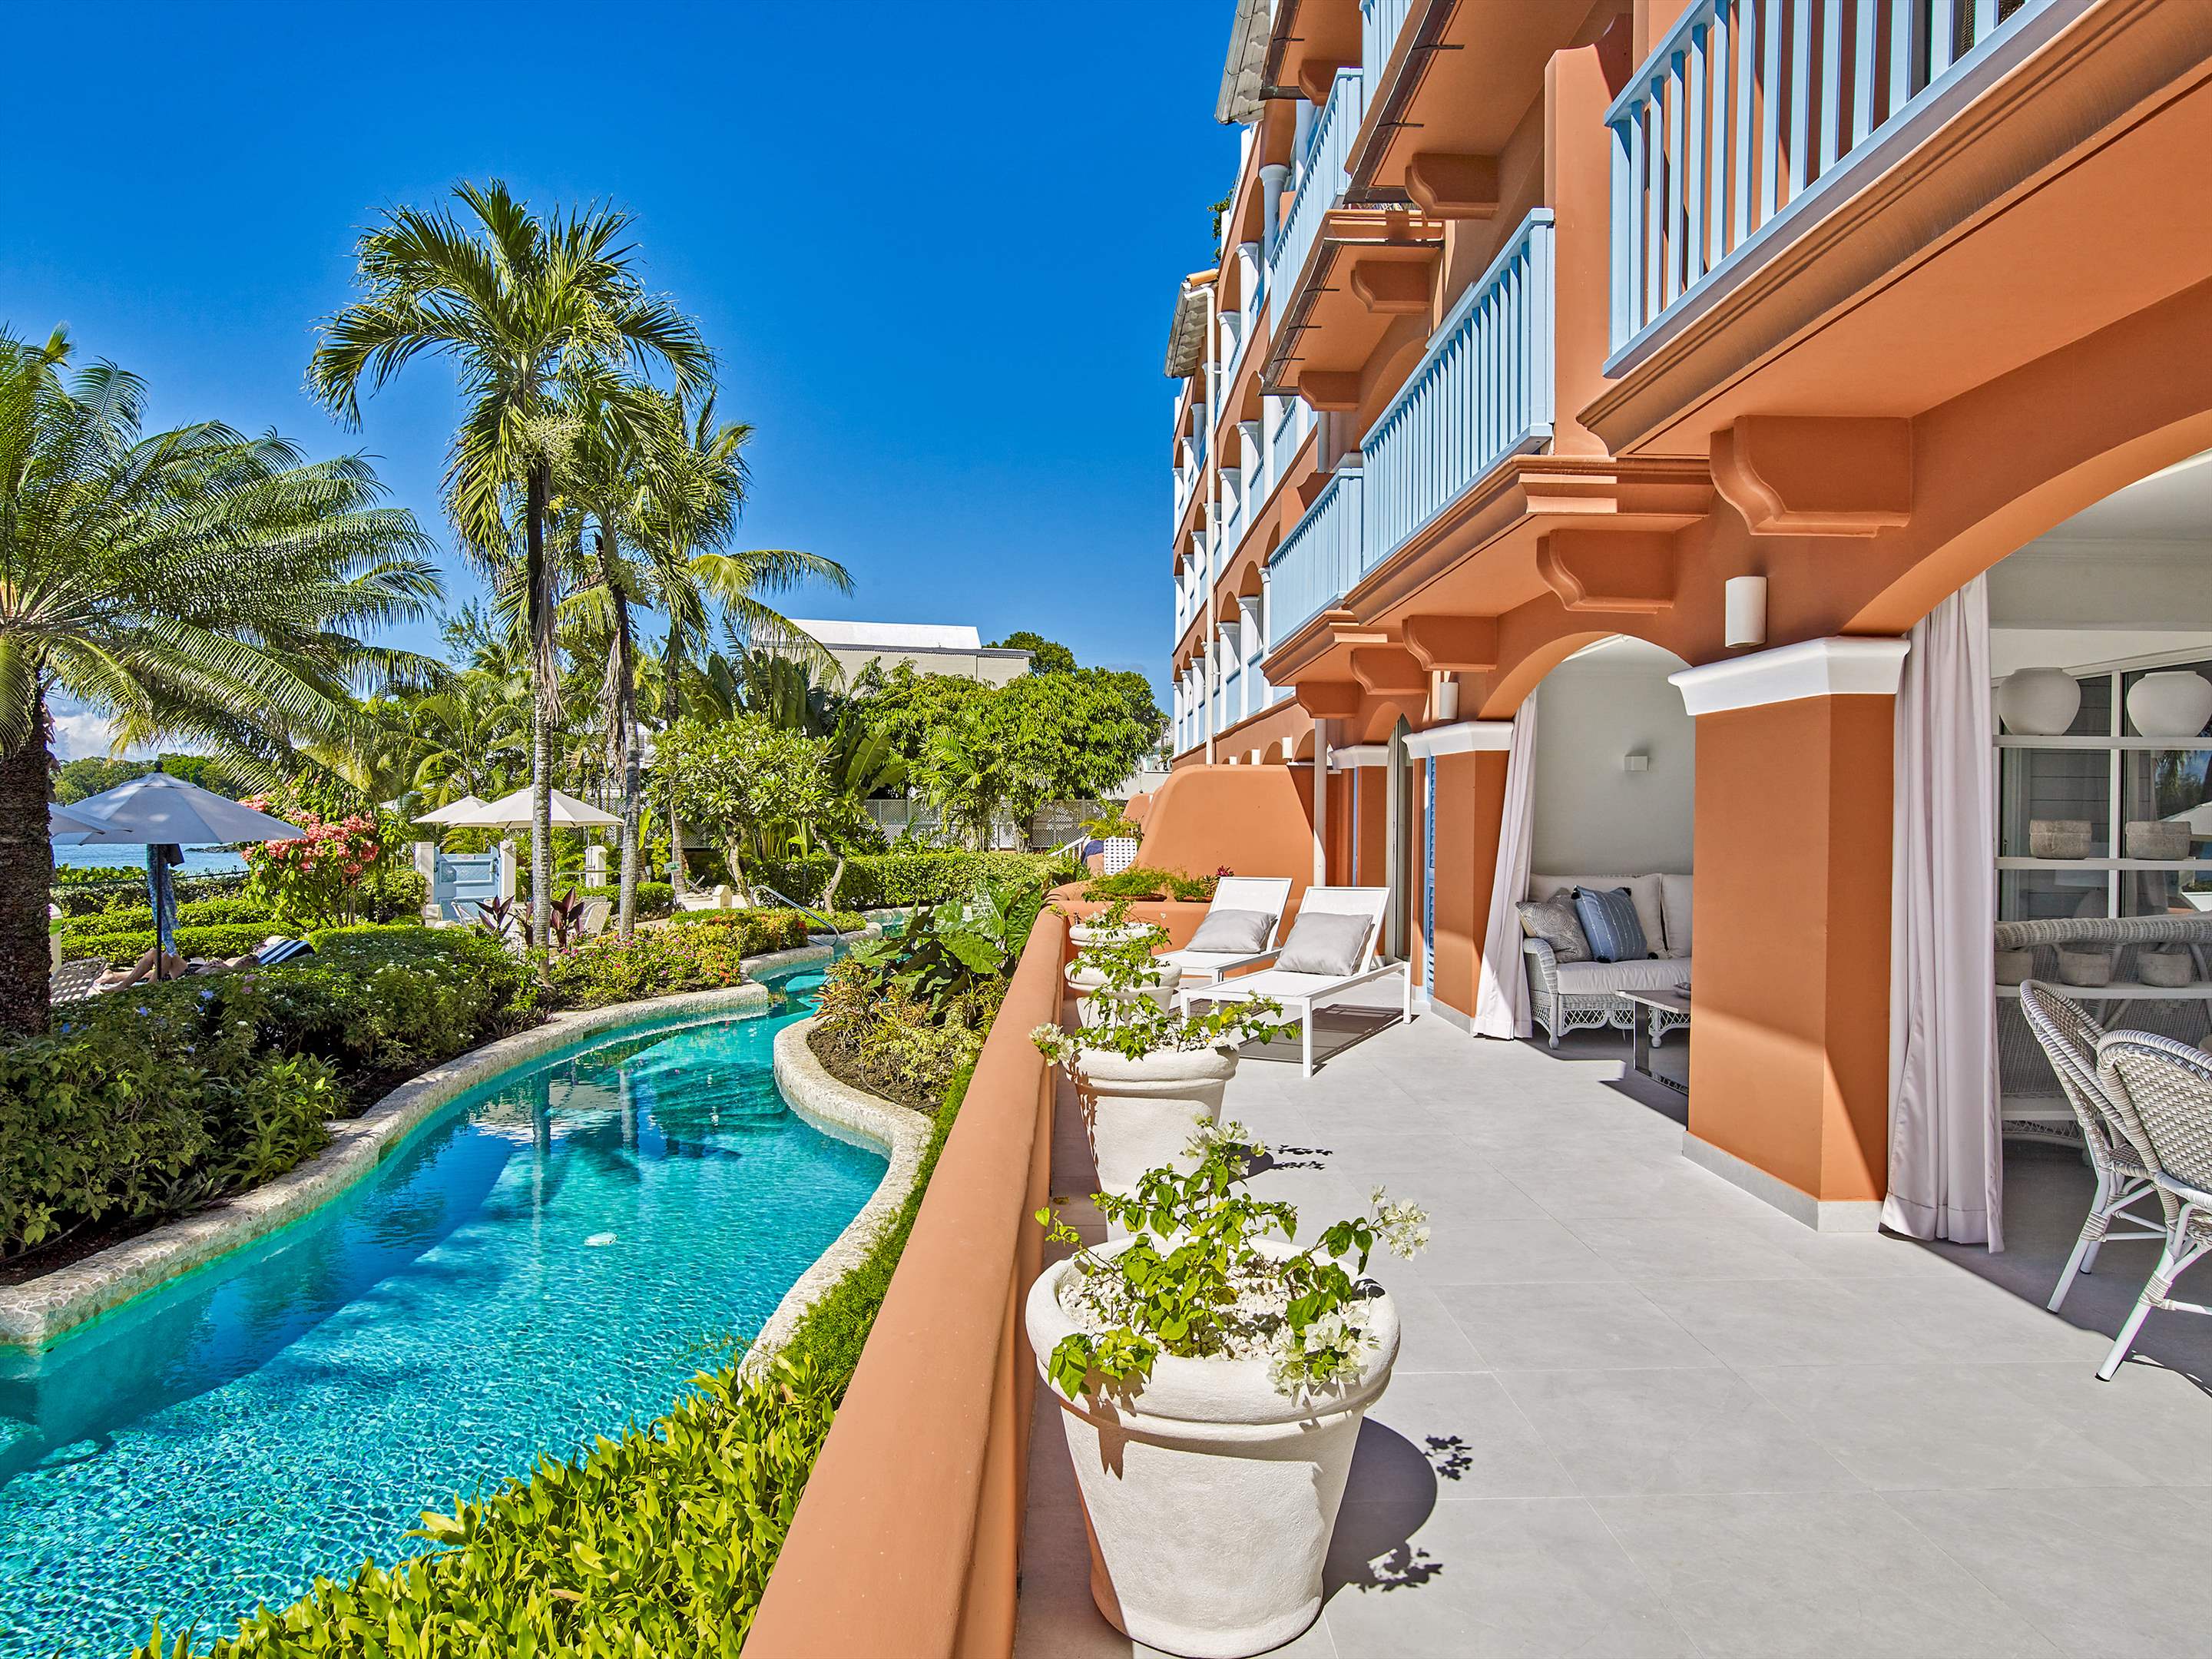 Villas on the Beach 102 , 3 bedroom, 3 bedroom apartment in St. James & West Coast, Barbados